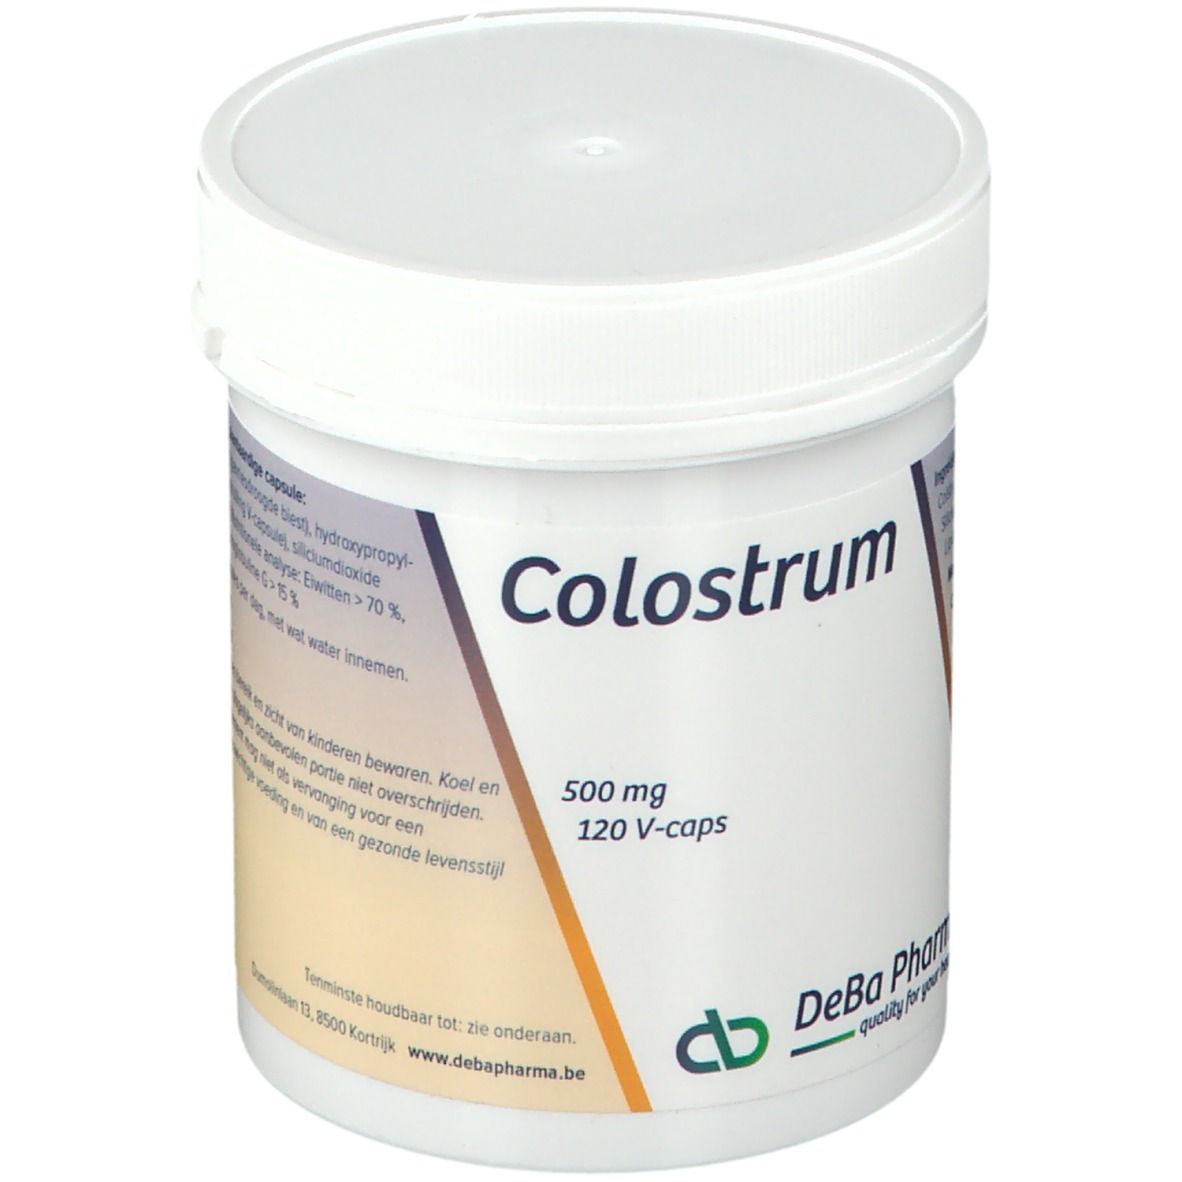 DeBa Pharma Colostrum 500 mg